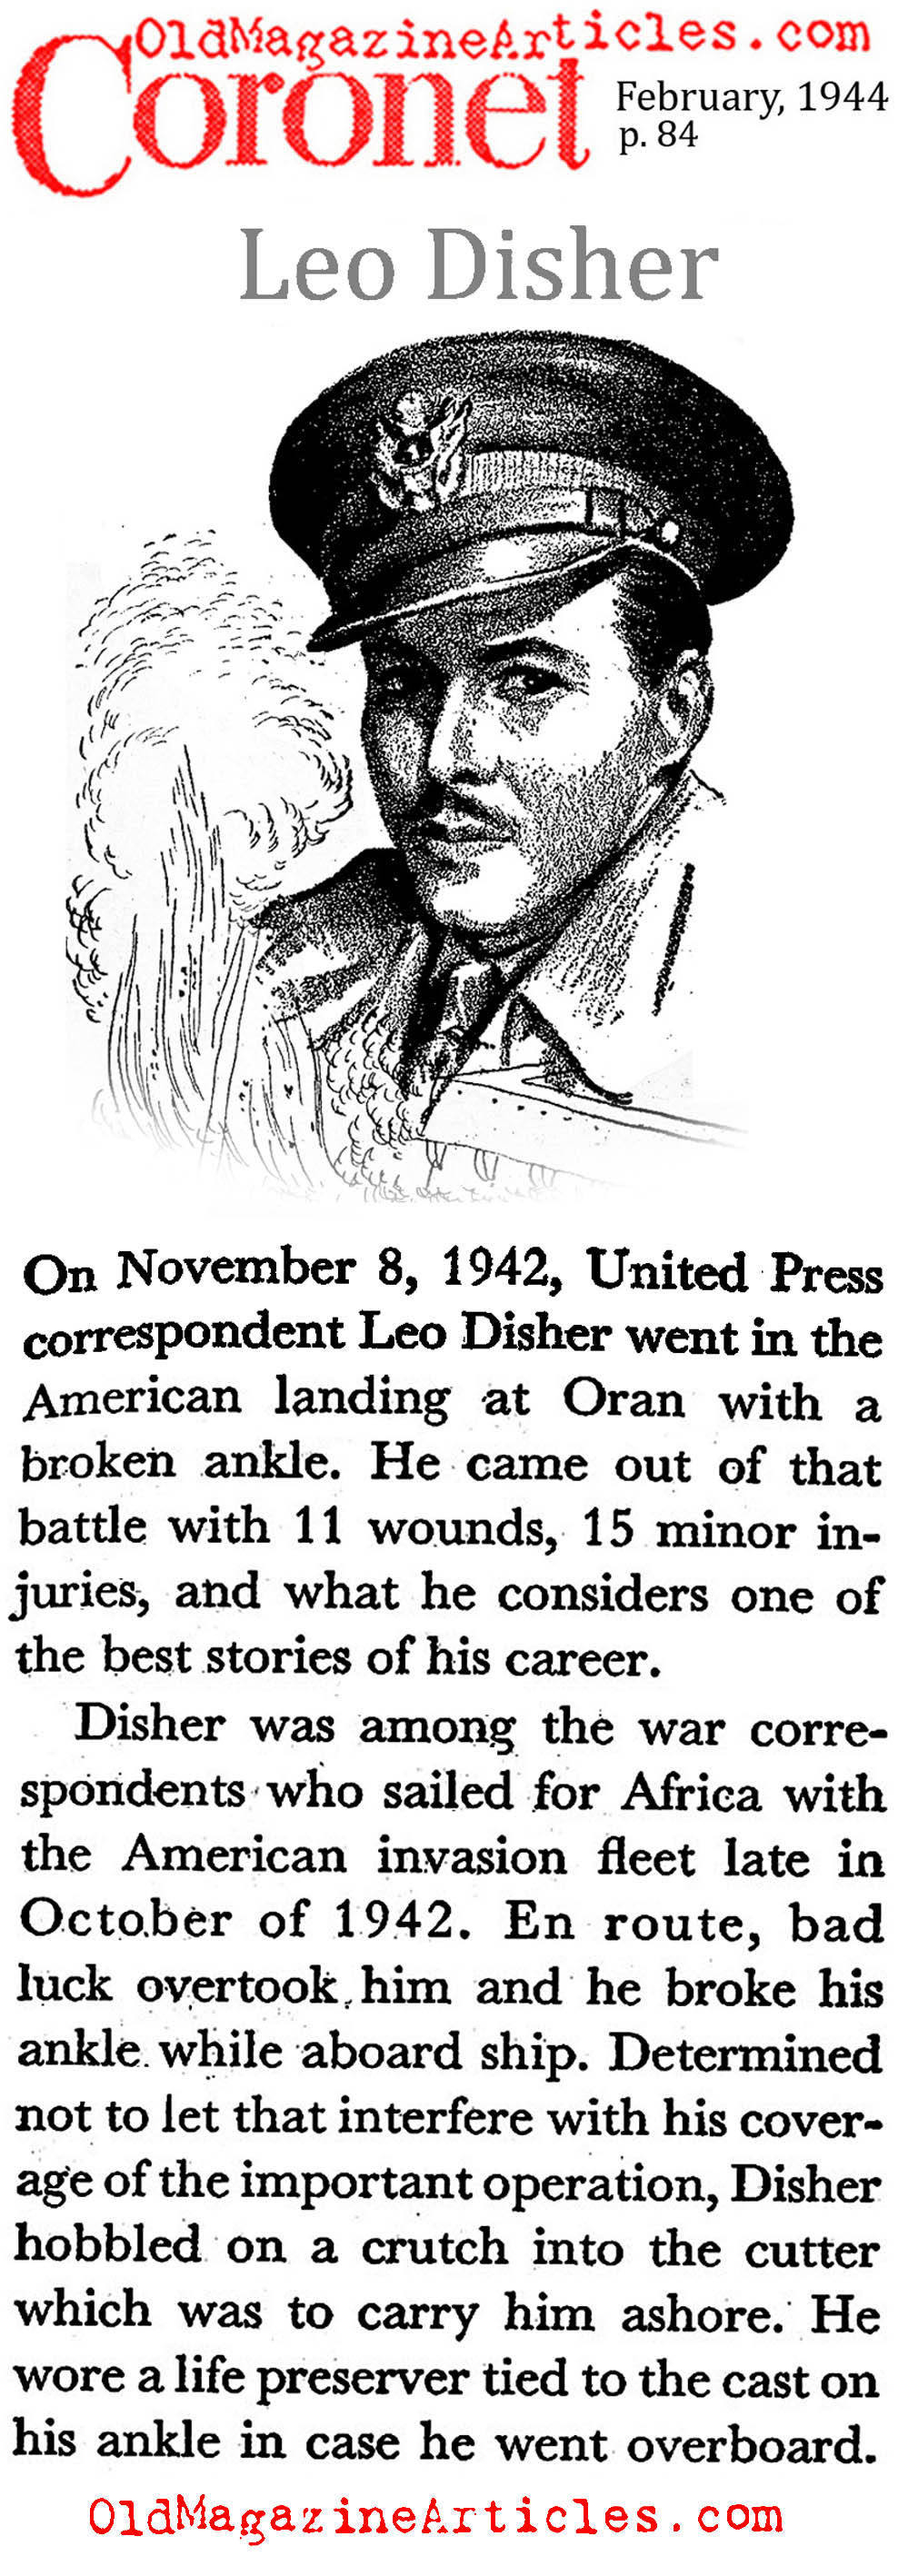 Leo Disher of the United Press (Coronet Magazine, 1944)